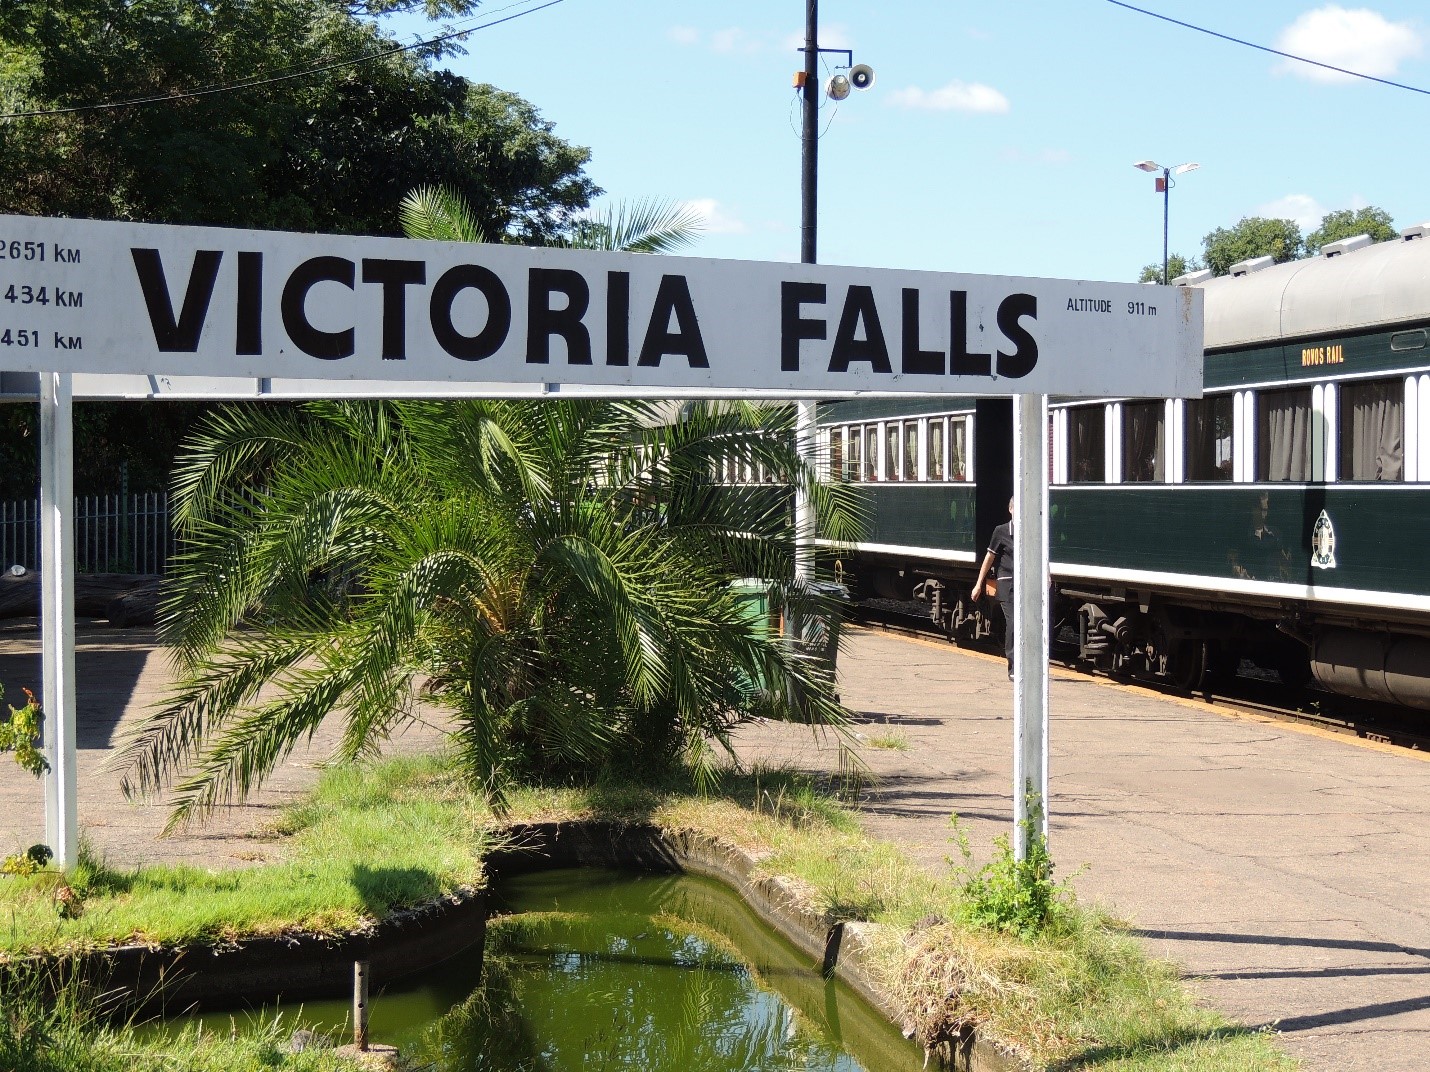 Rovos Rail Pretoria to Victoria Falls